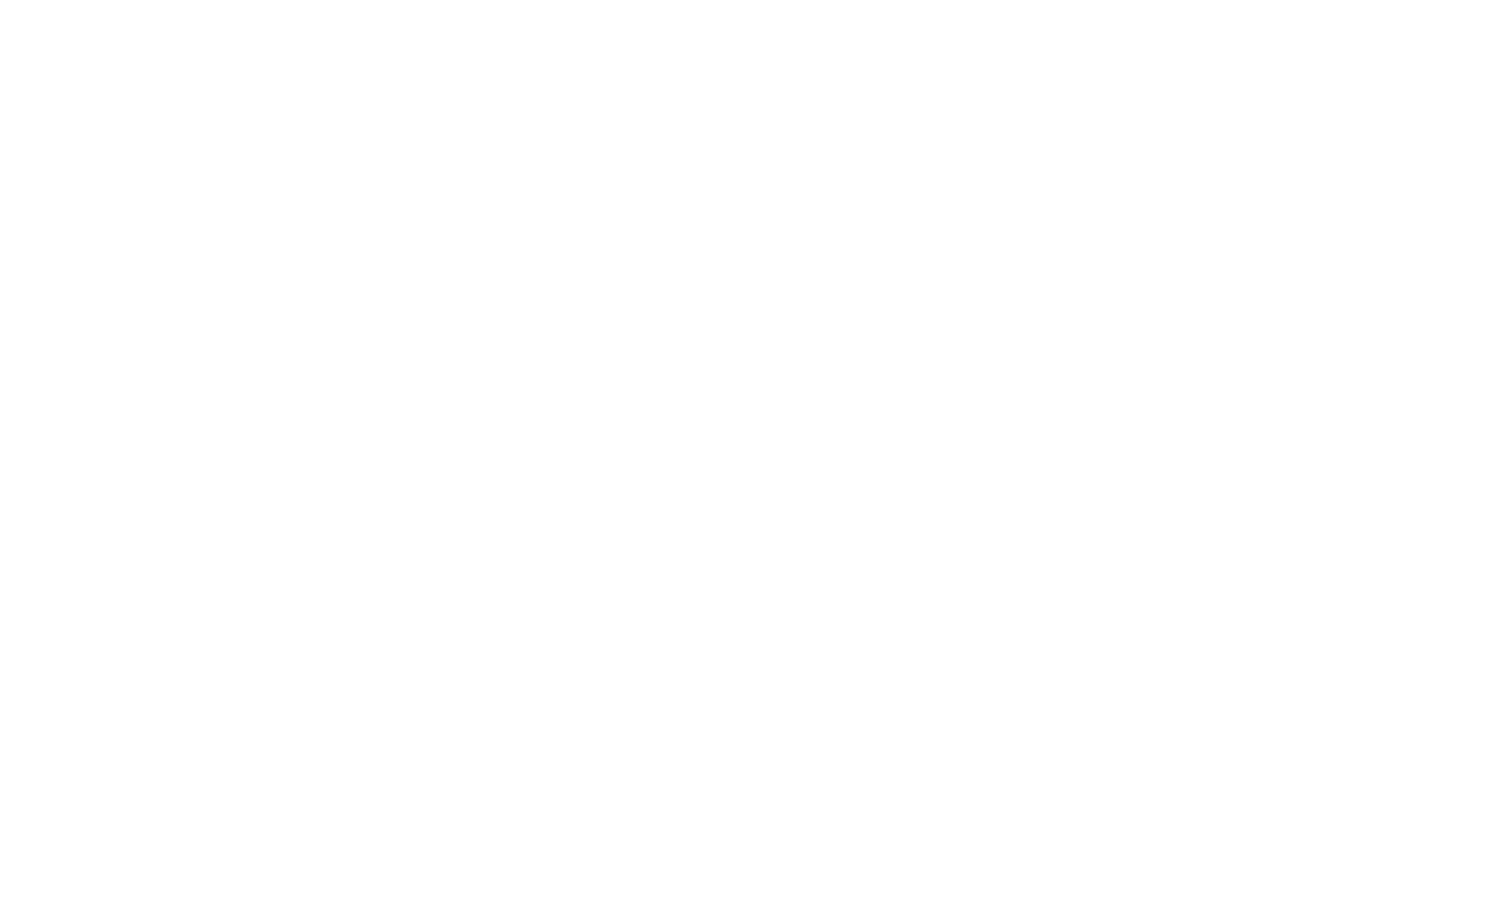 CULT IMAGES